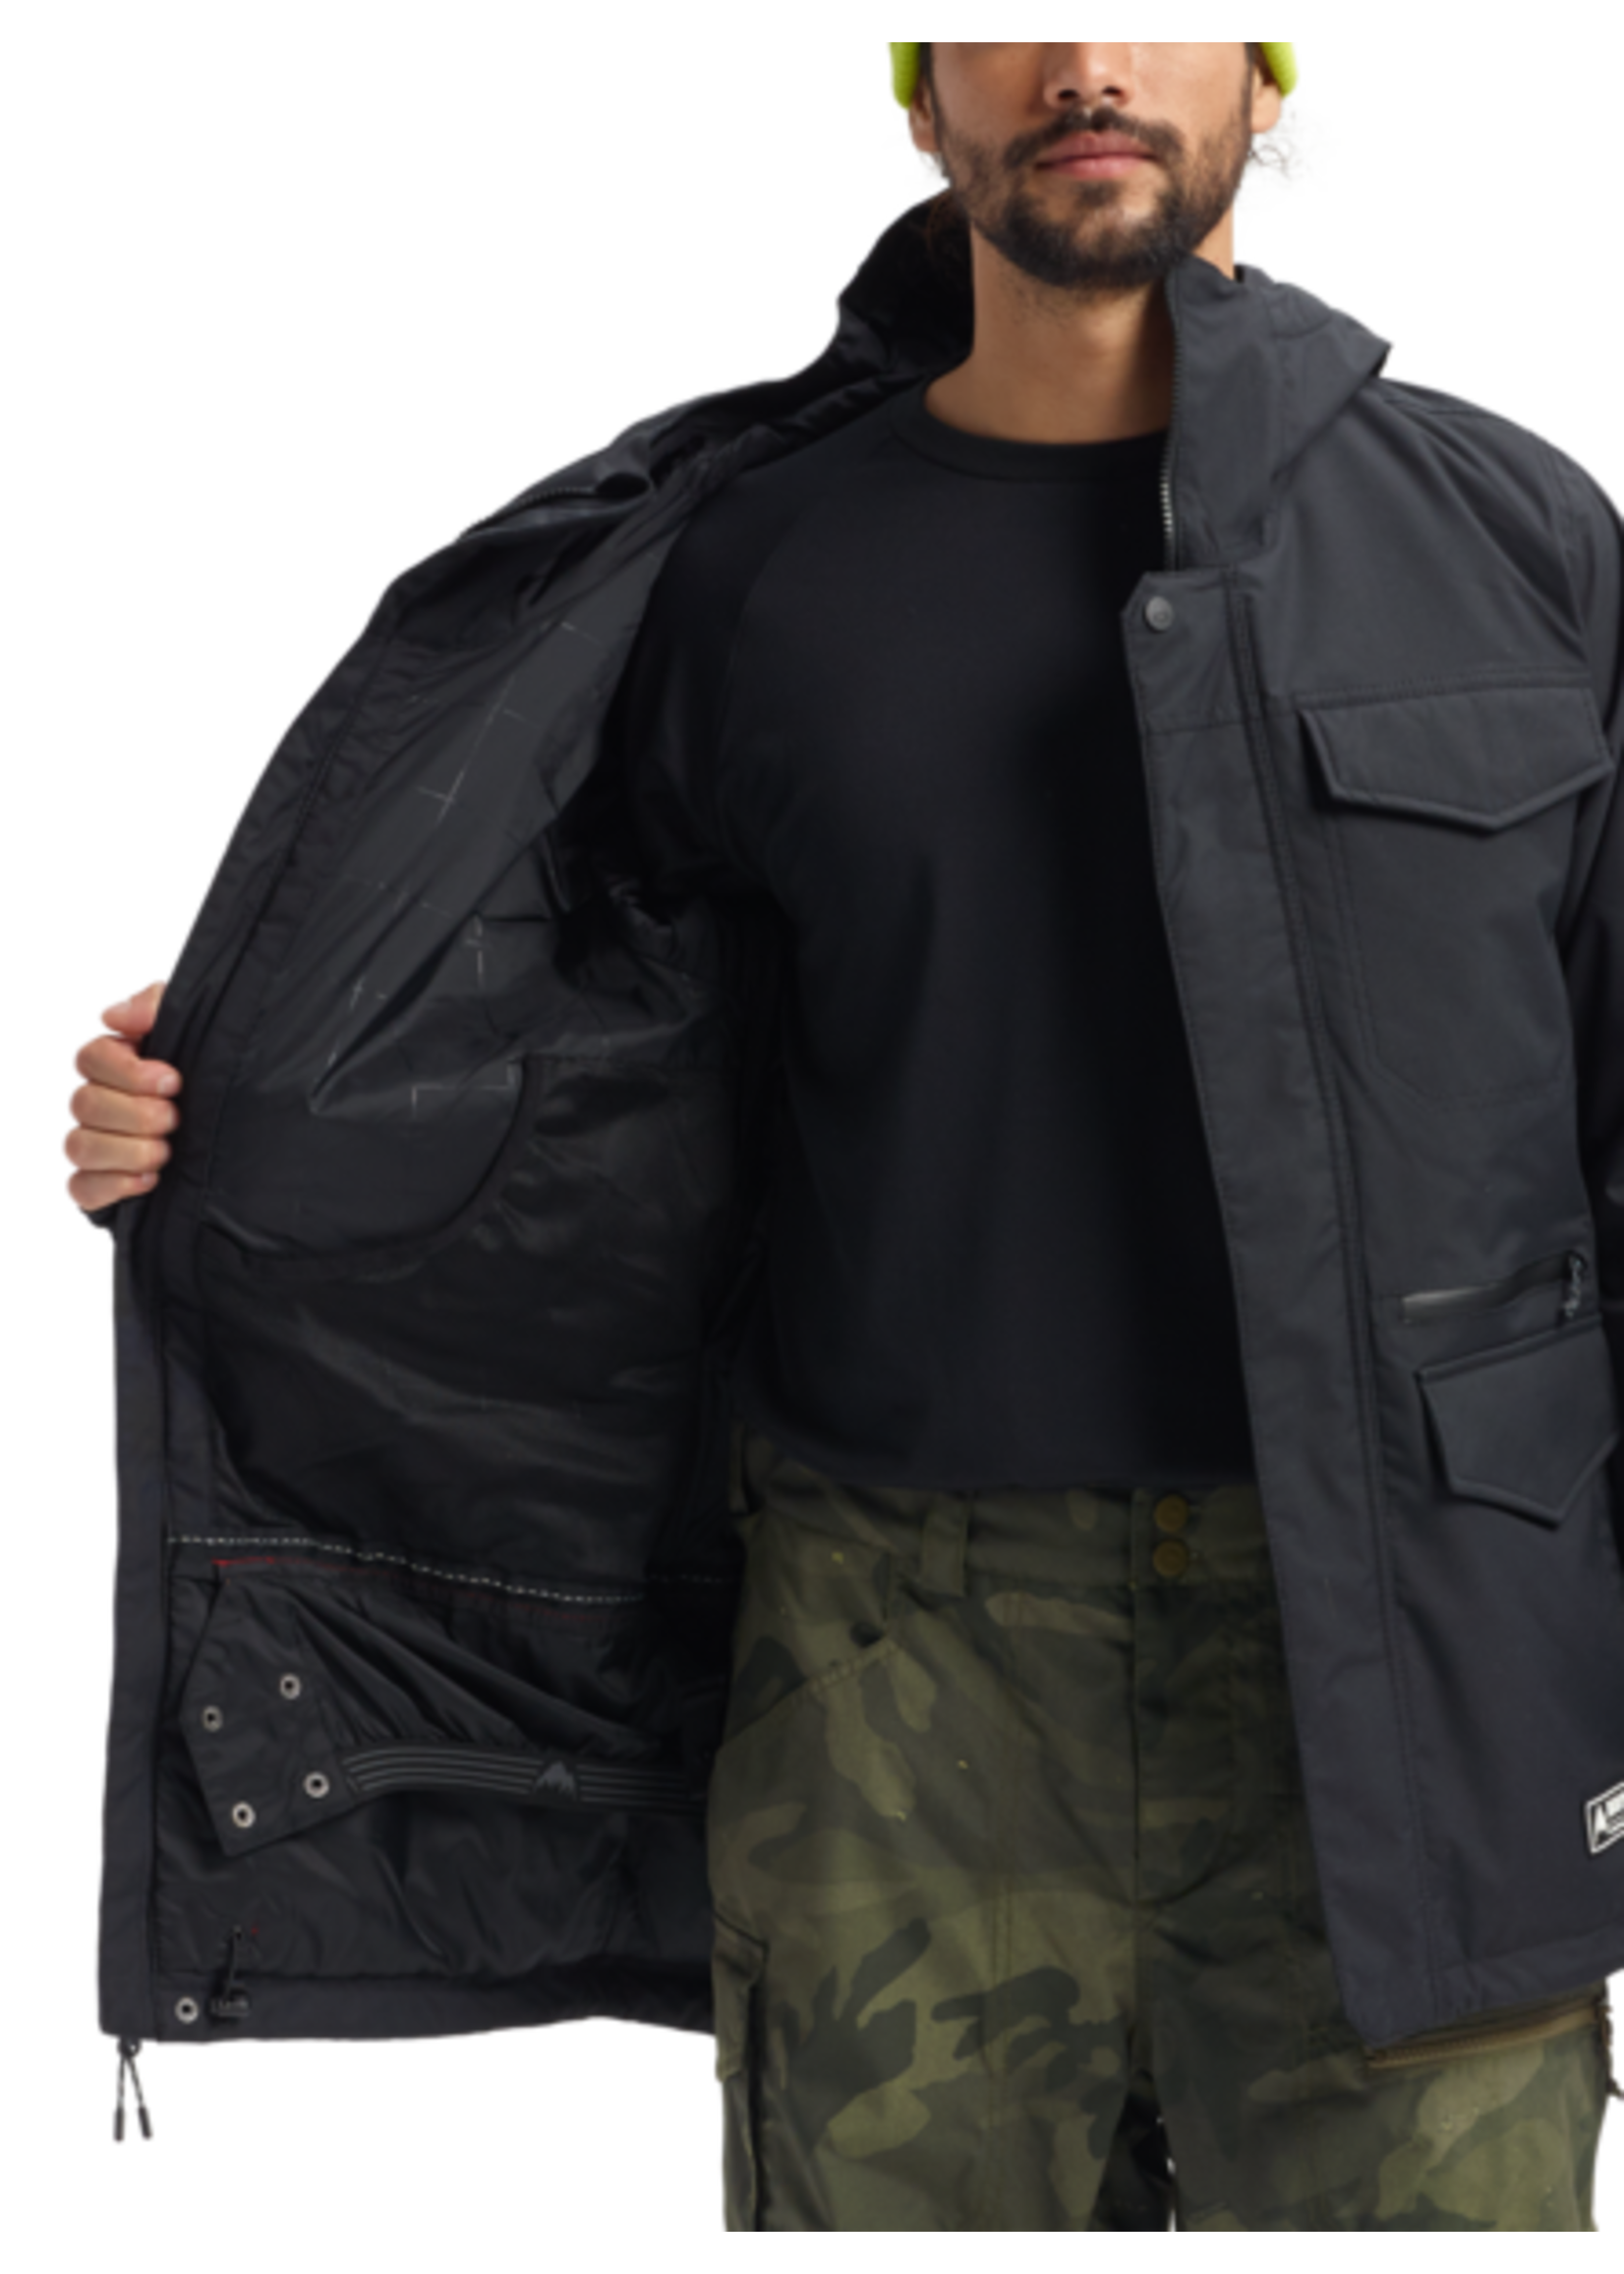 Burton Men's Covert 2L Jacket - Black